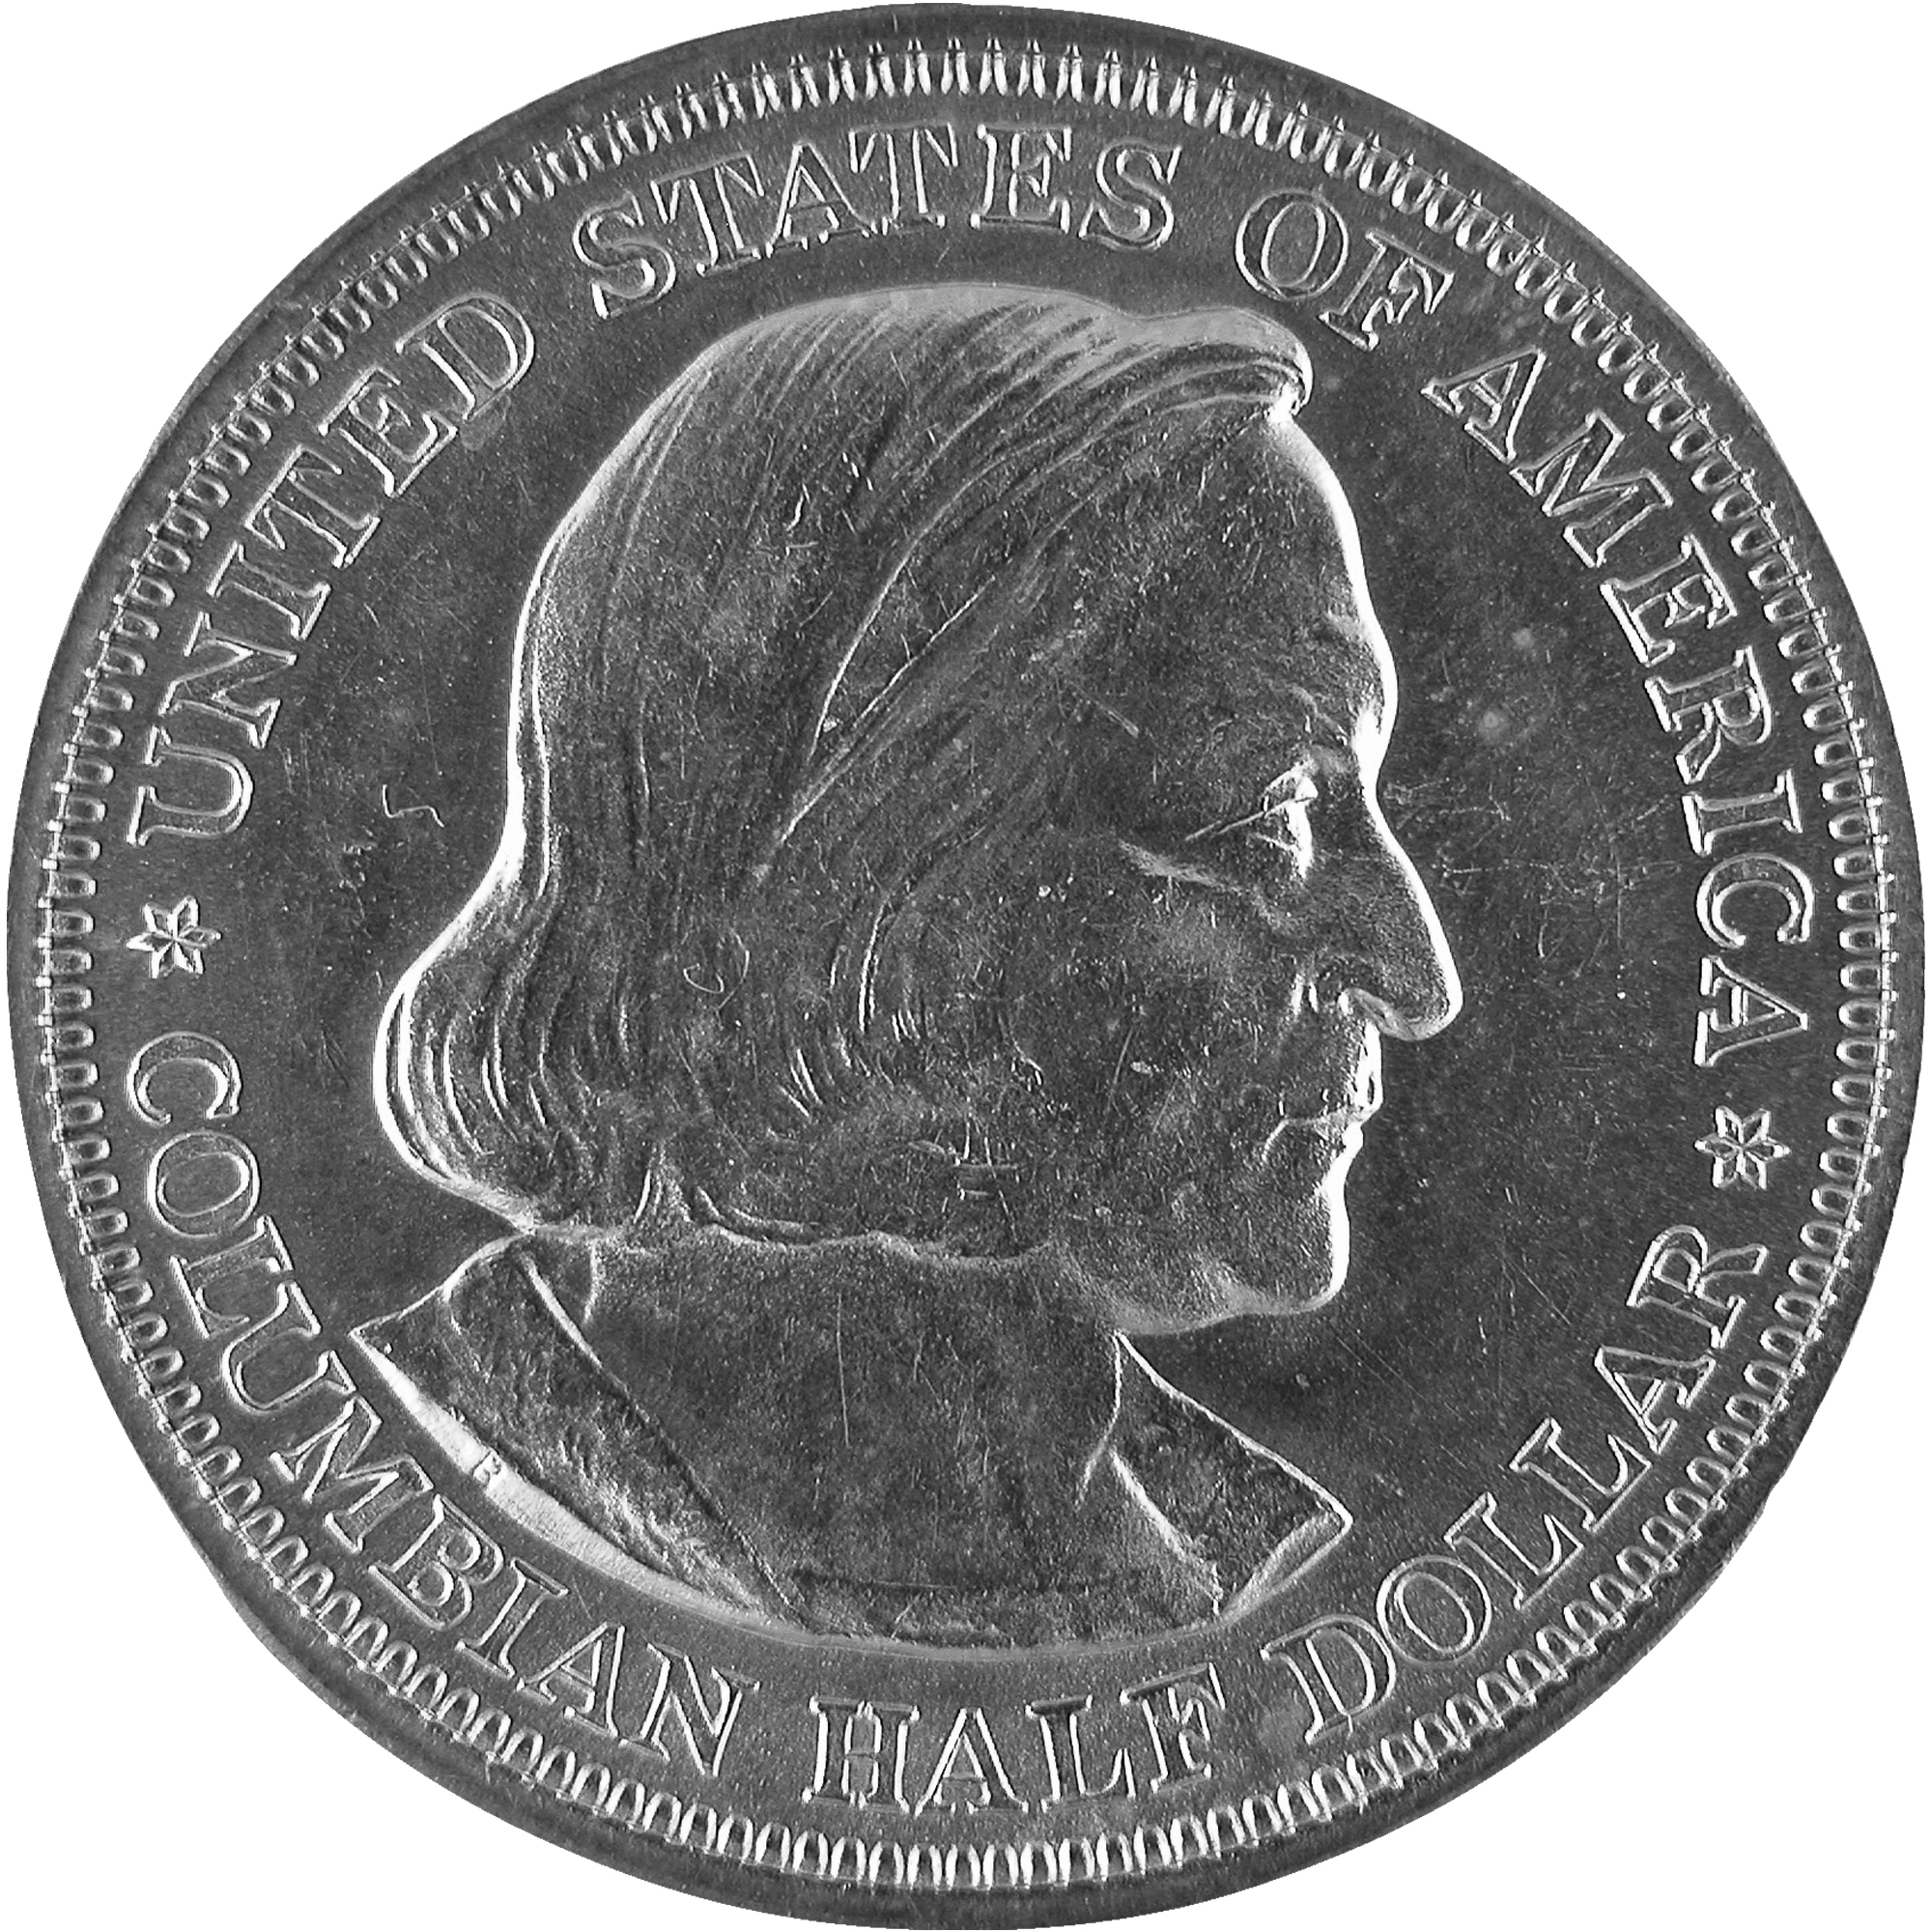 1892 Columbian Exposition Commemorative Silver Half Dollar Coin Obverse